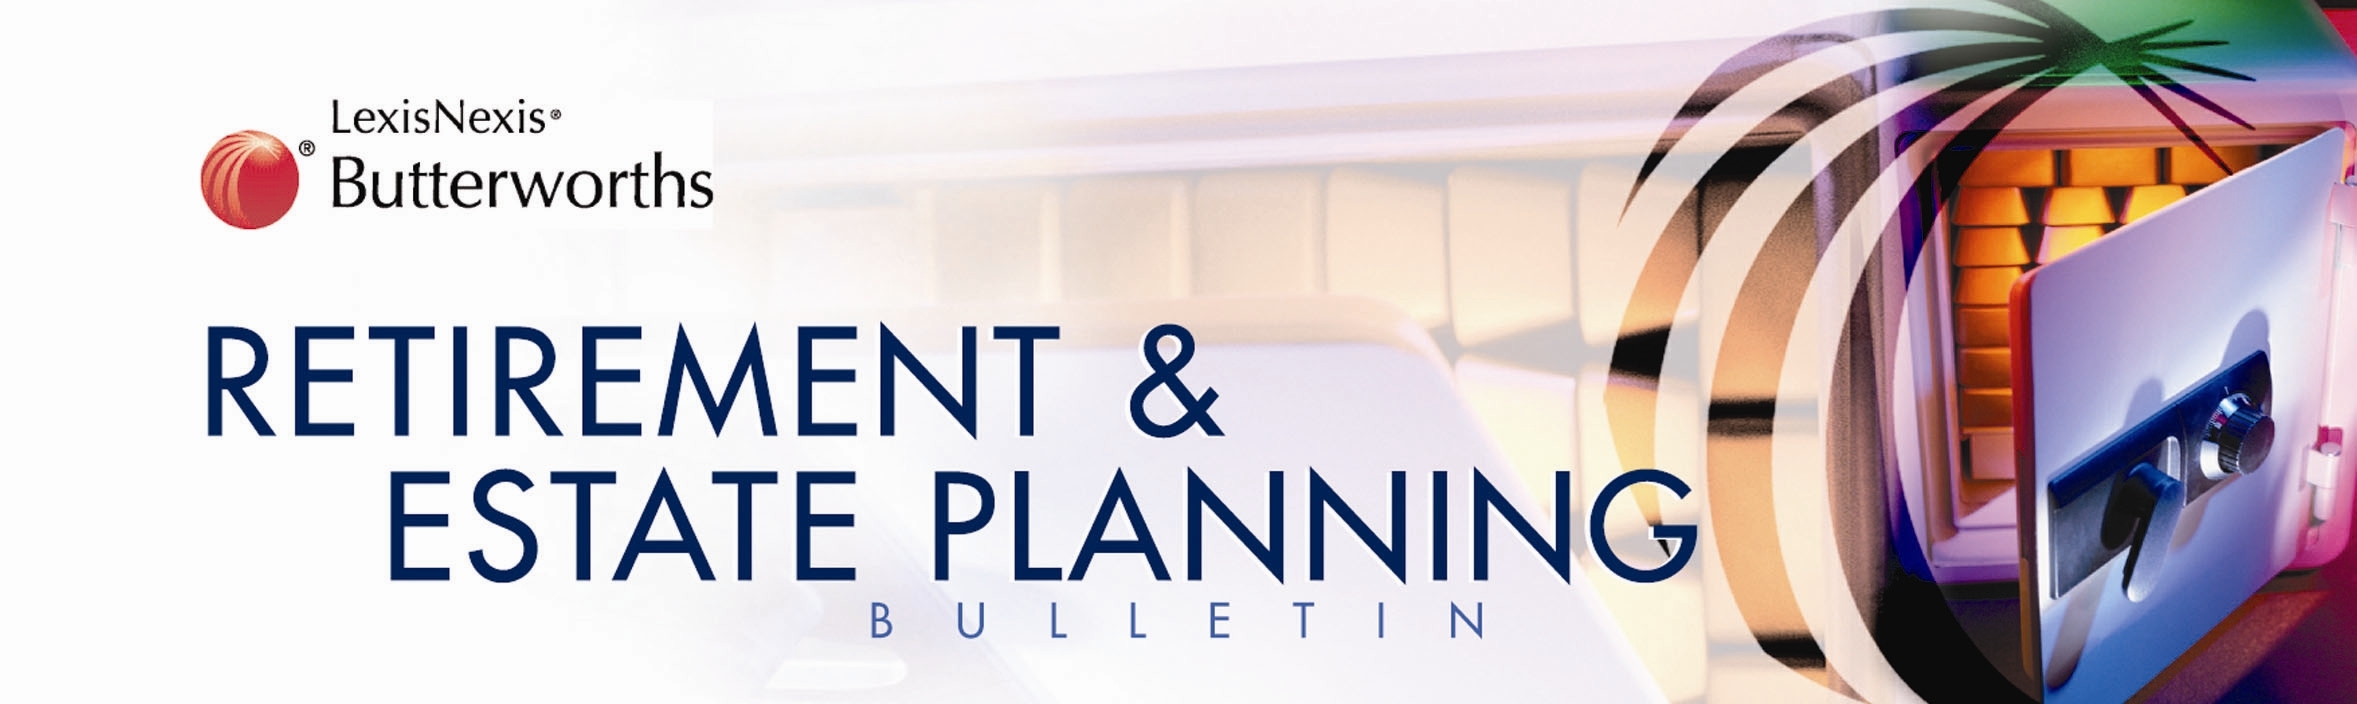 Retirement & Estate Planning Bulletin 